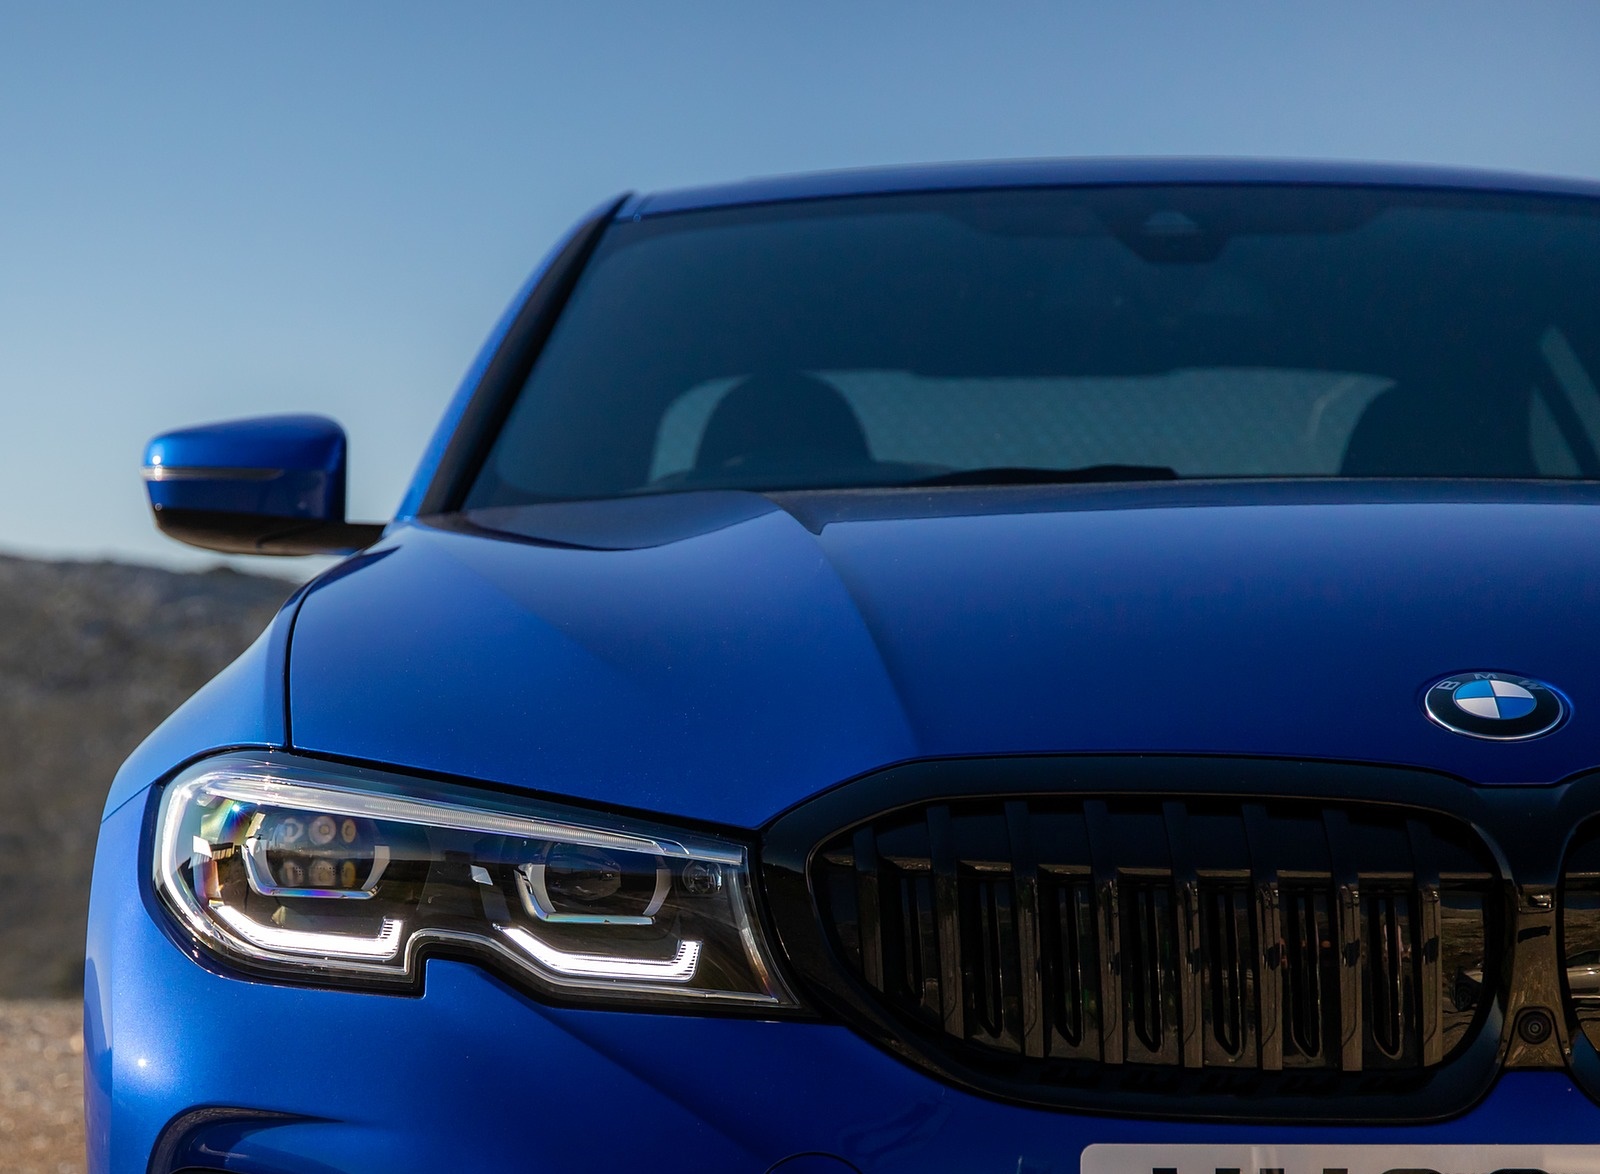 2019 BMW 3-Series Saloon 320d xDrive (UK-Spec) Headlight Wallpapers #33 of 46